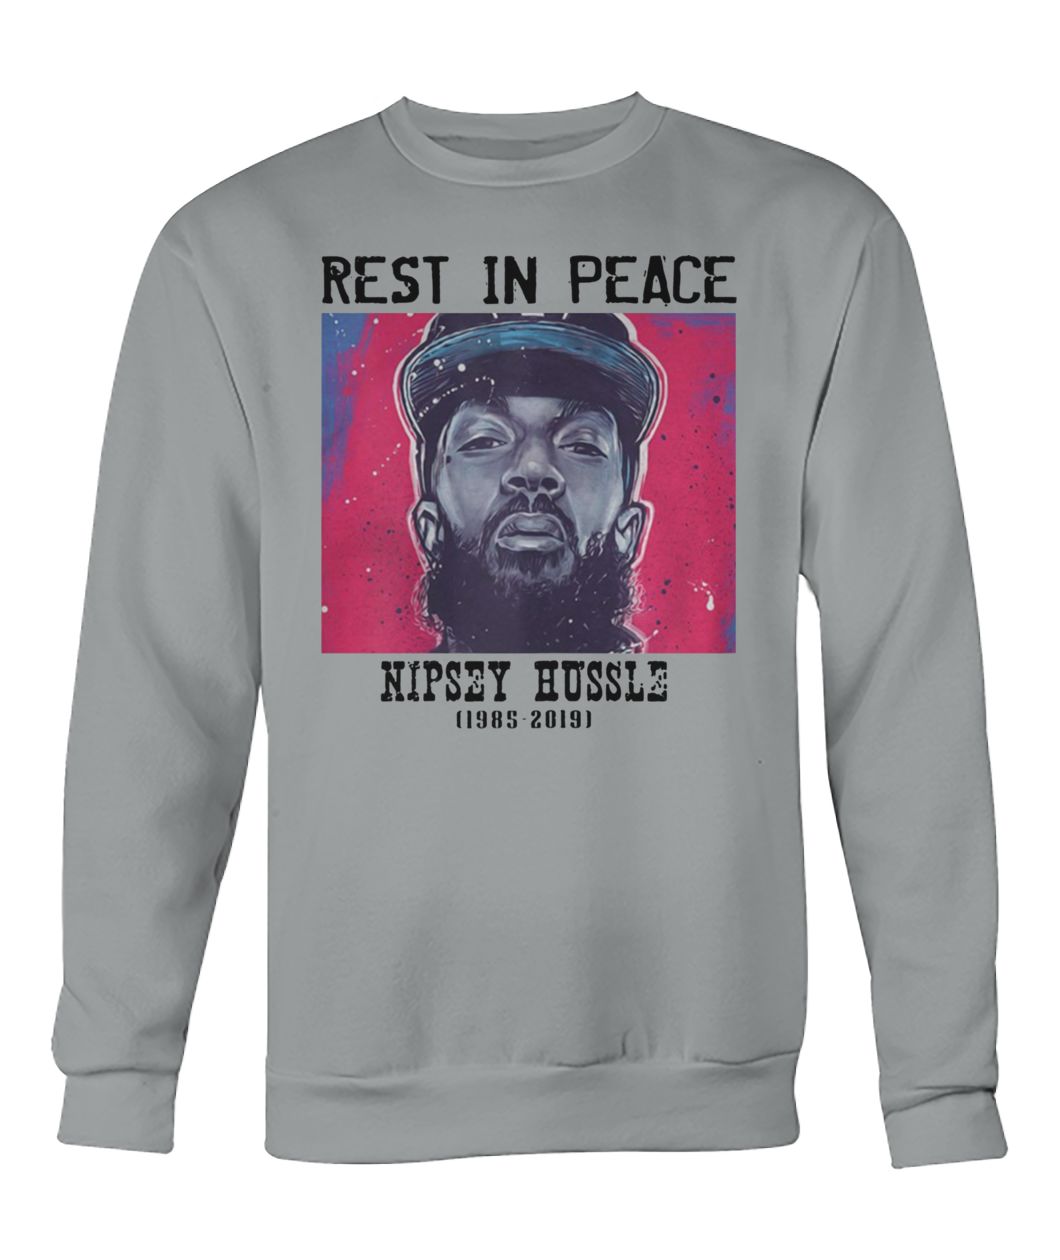 Rip Nipsey Hussle 1985 2019 sweatshirt